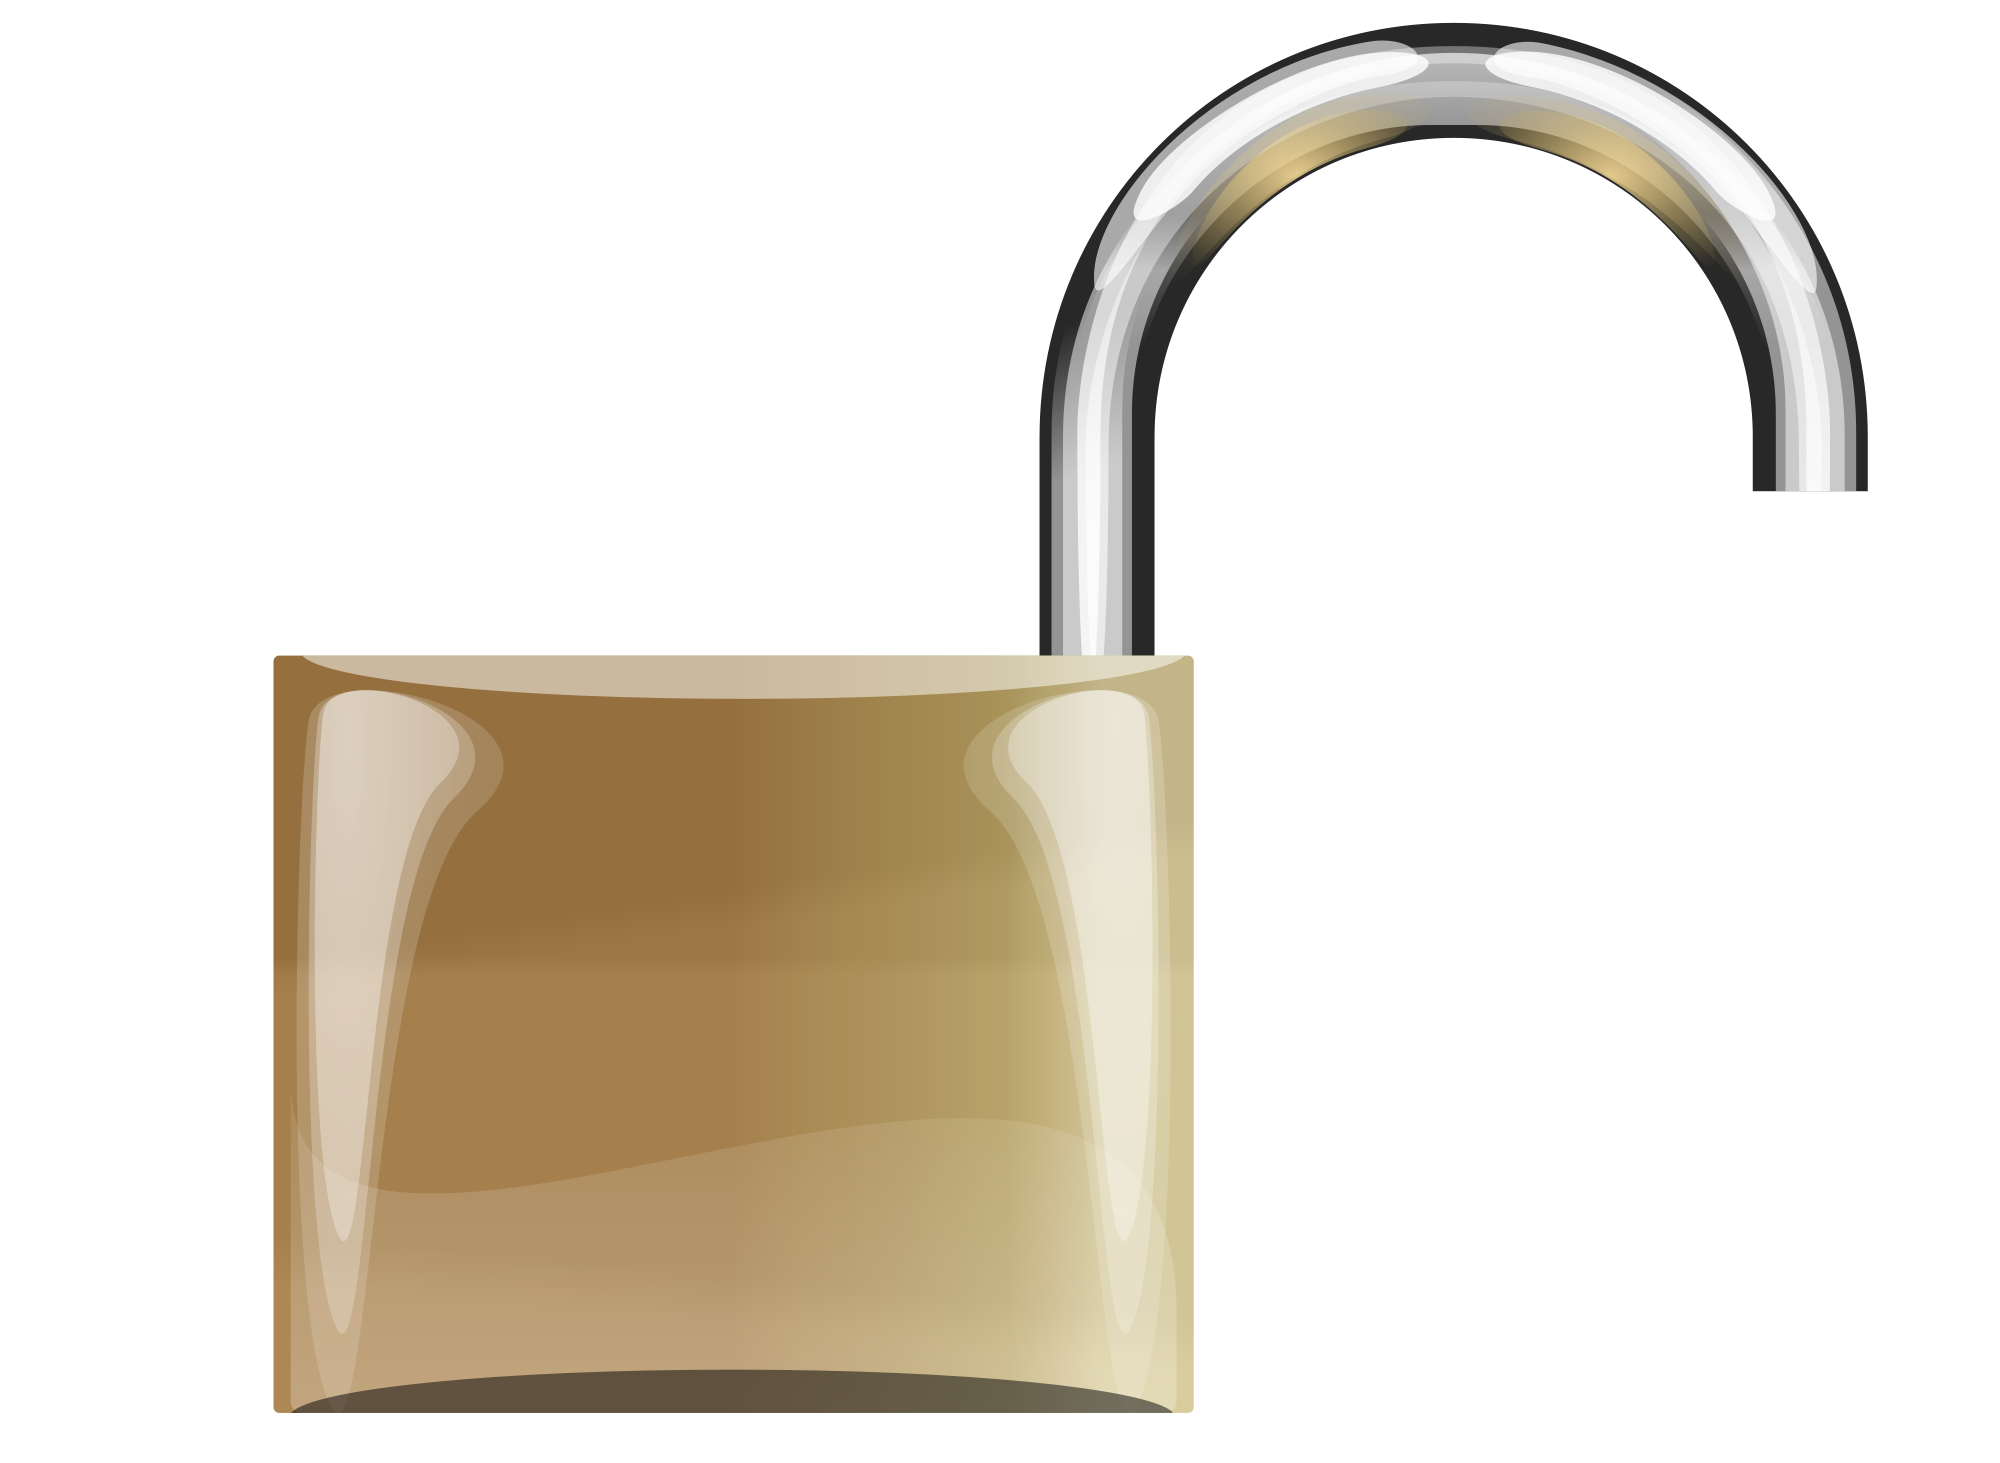 lock clipart round lock